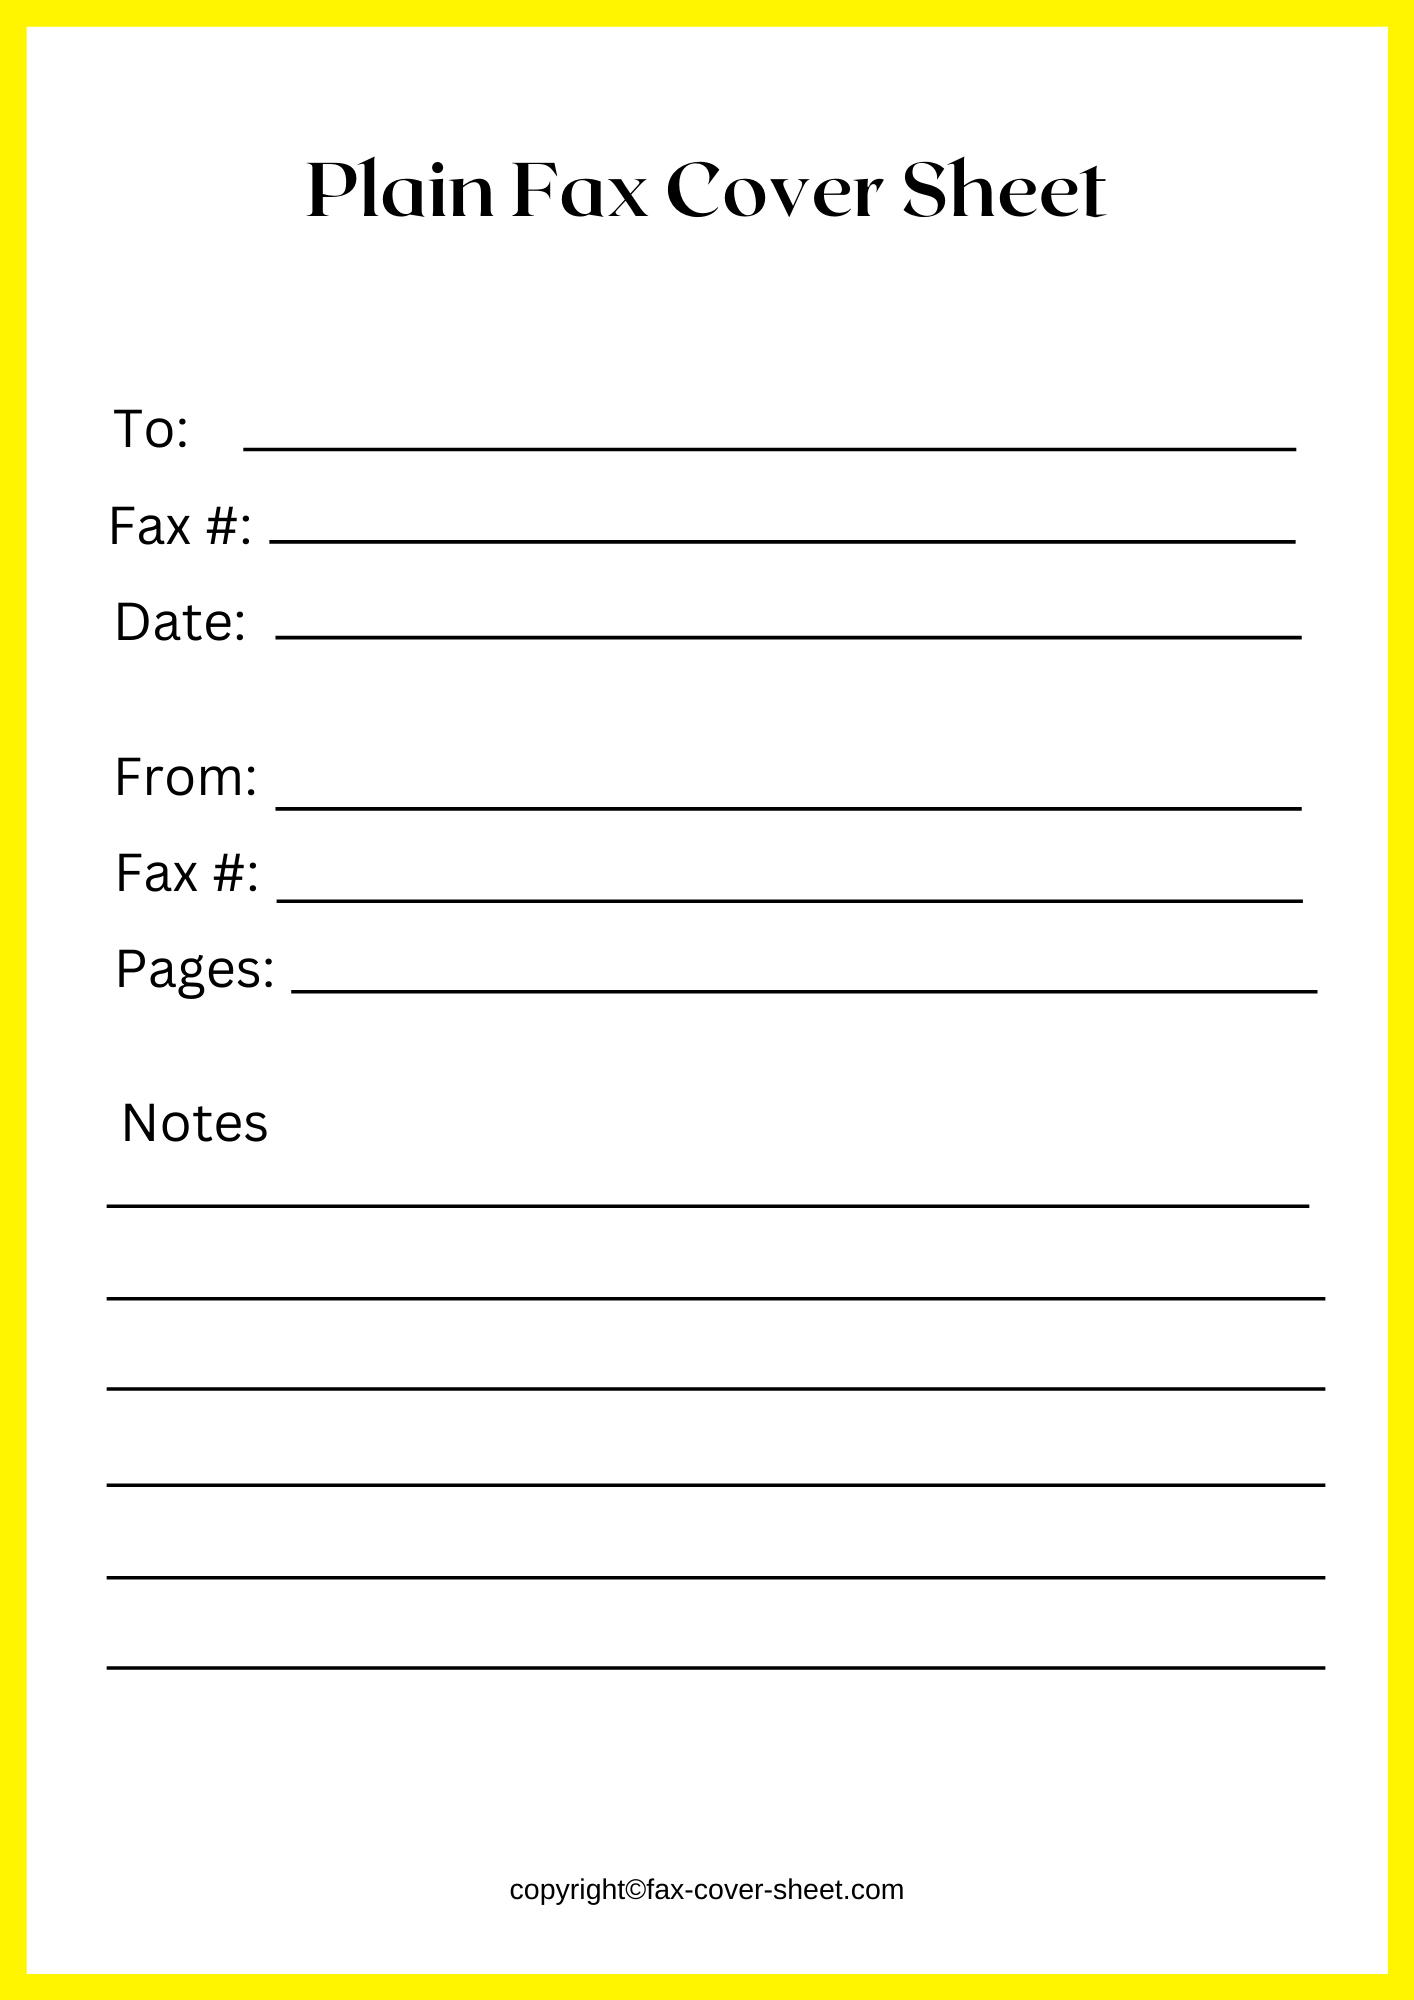 Plain Fax Cover Sheet Template